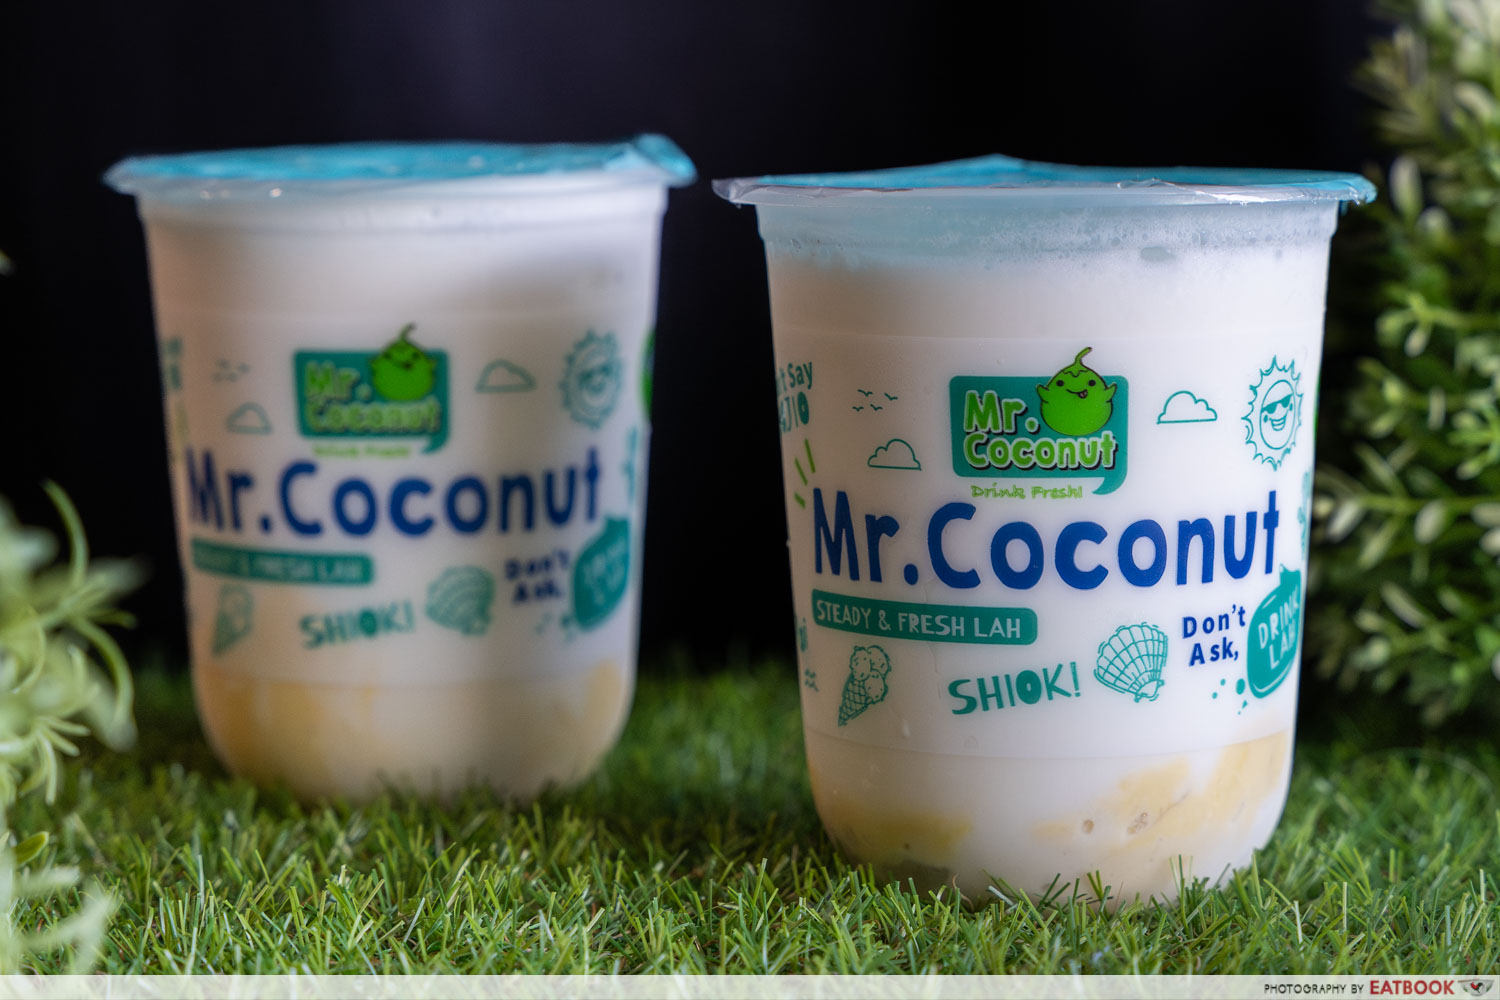 mr coconut - coconut mao shan wang shake intro